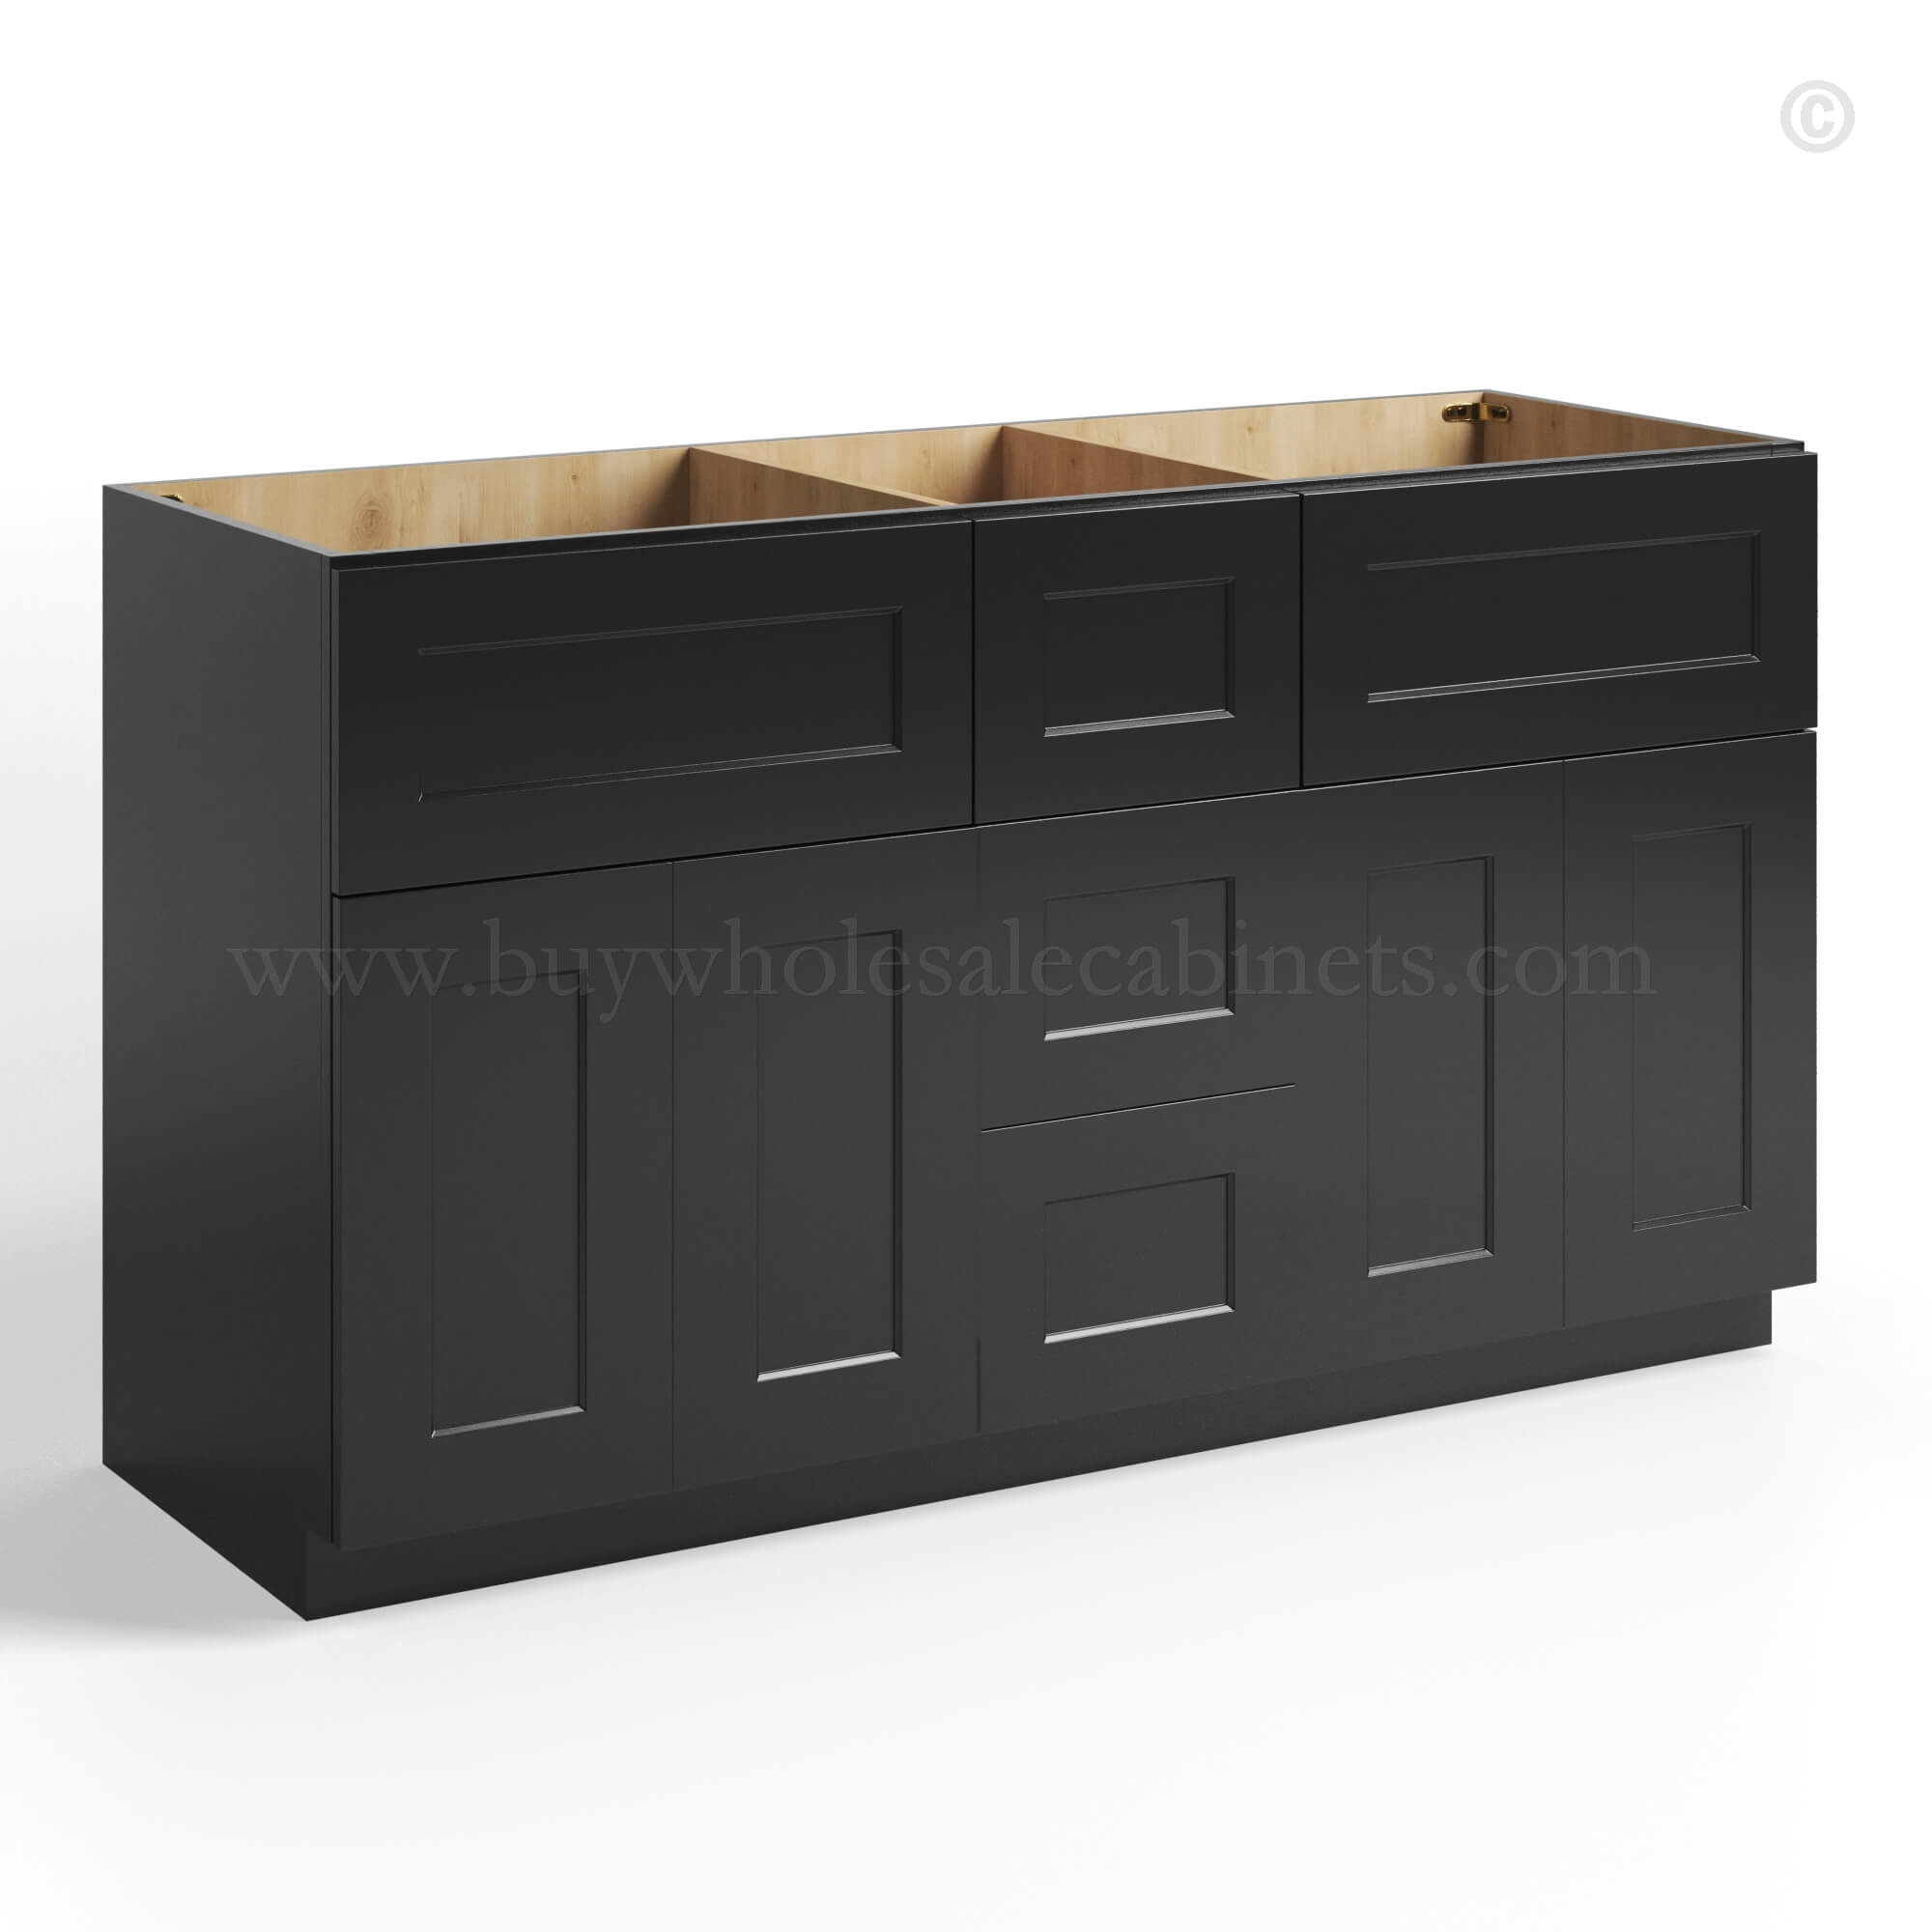 Black Shaker Vanity Sink Base Combo, rta cabinets, wholesale cabinets